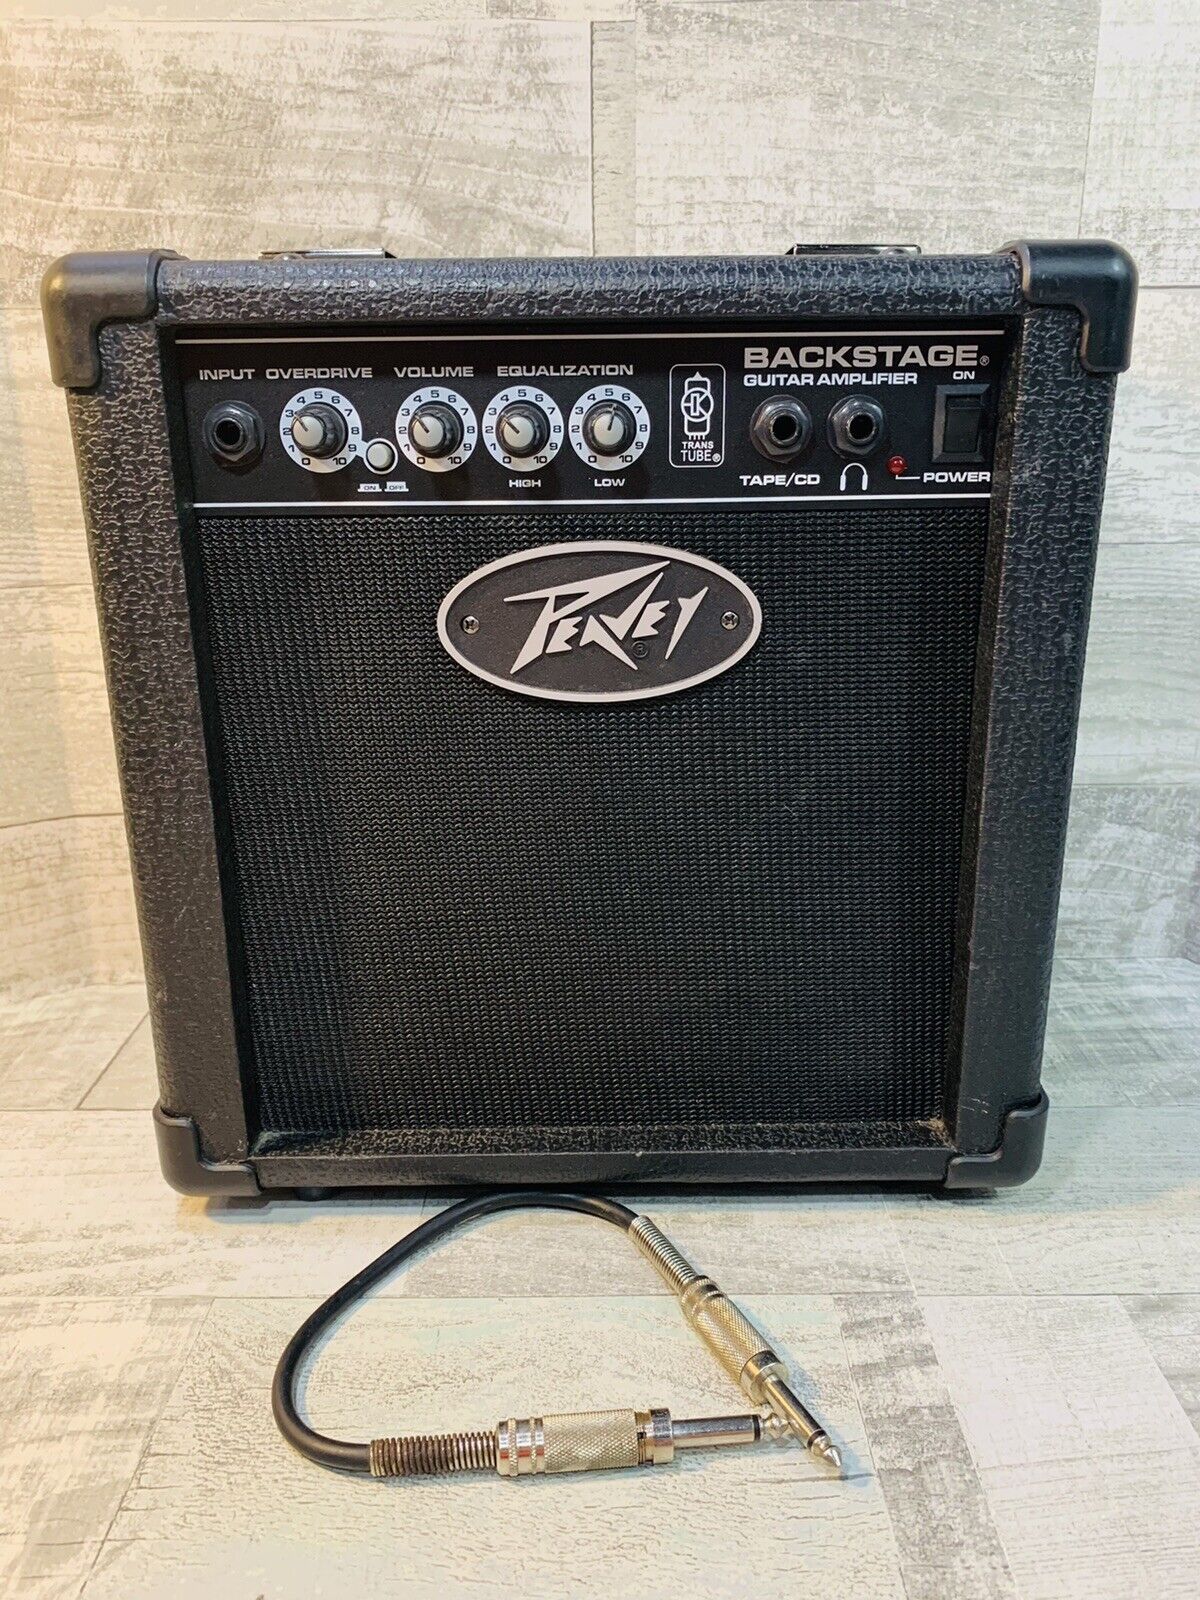 Peavey Backstage Guitar Oakland Mall Amplifier 26 Watts 4